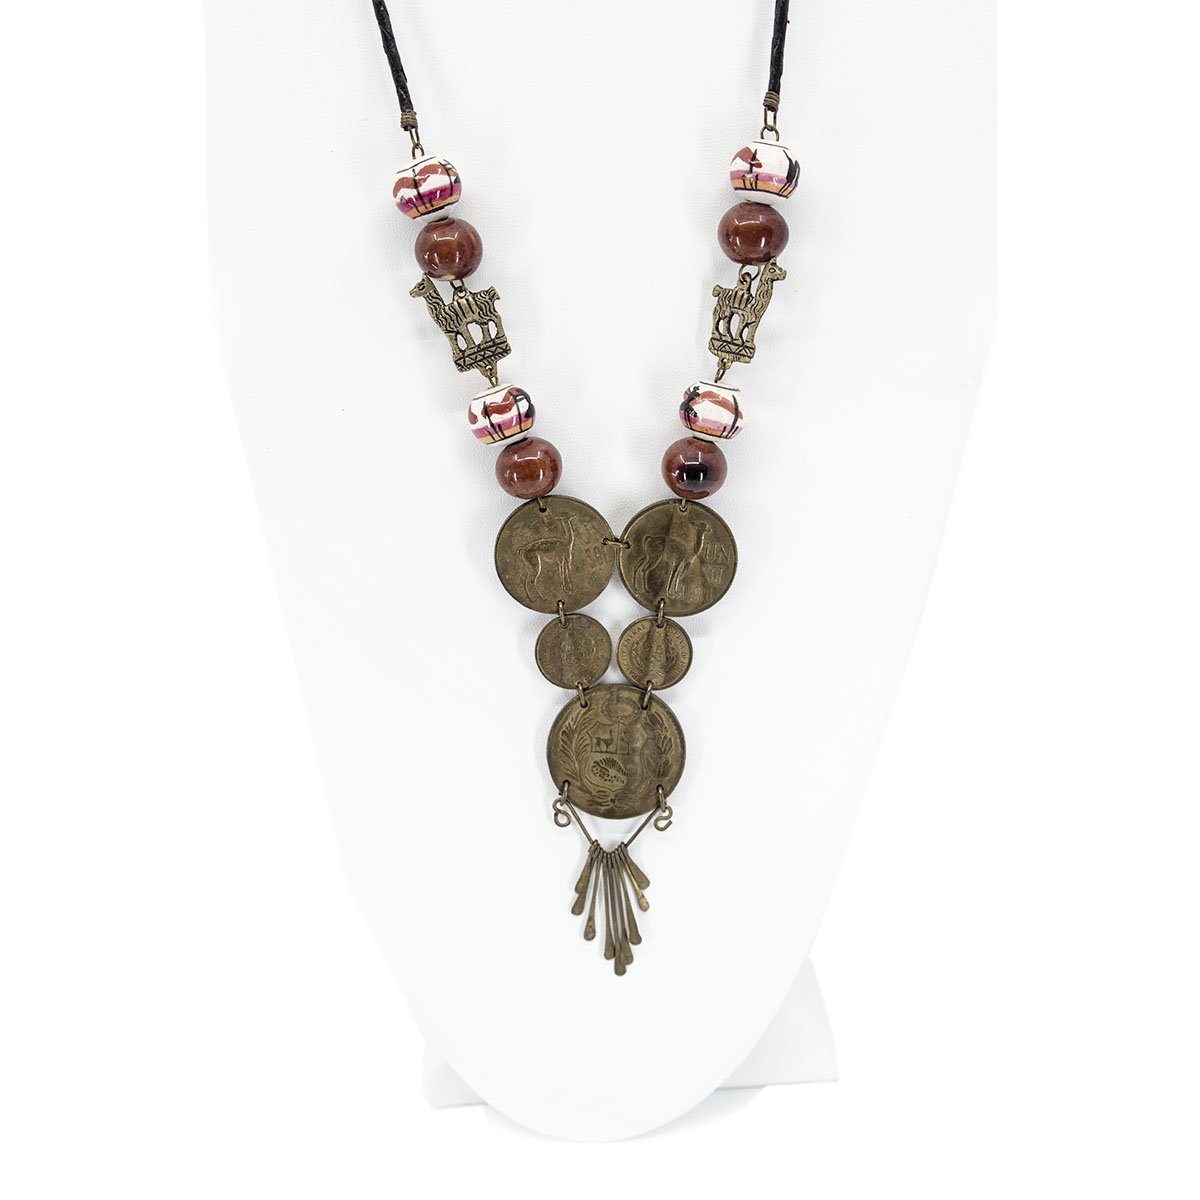 llama necklace, Brass peruvian coins necklace